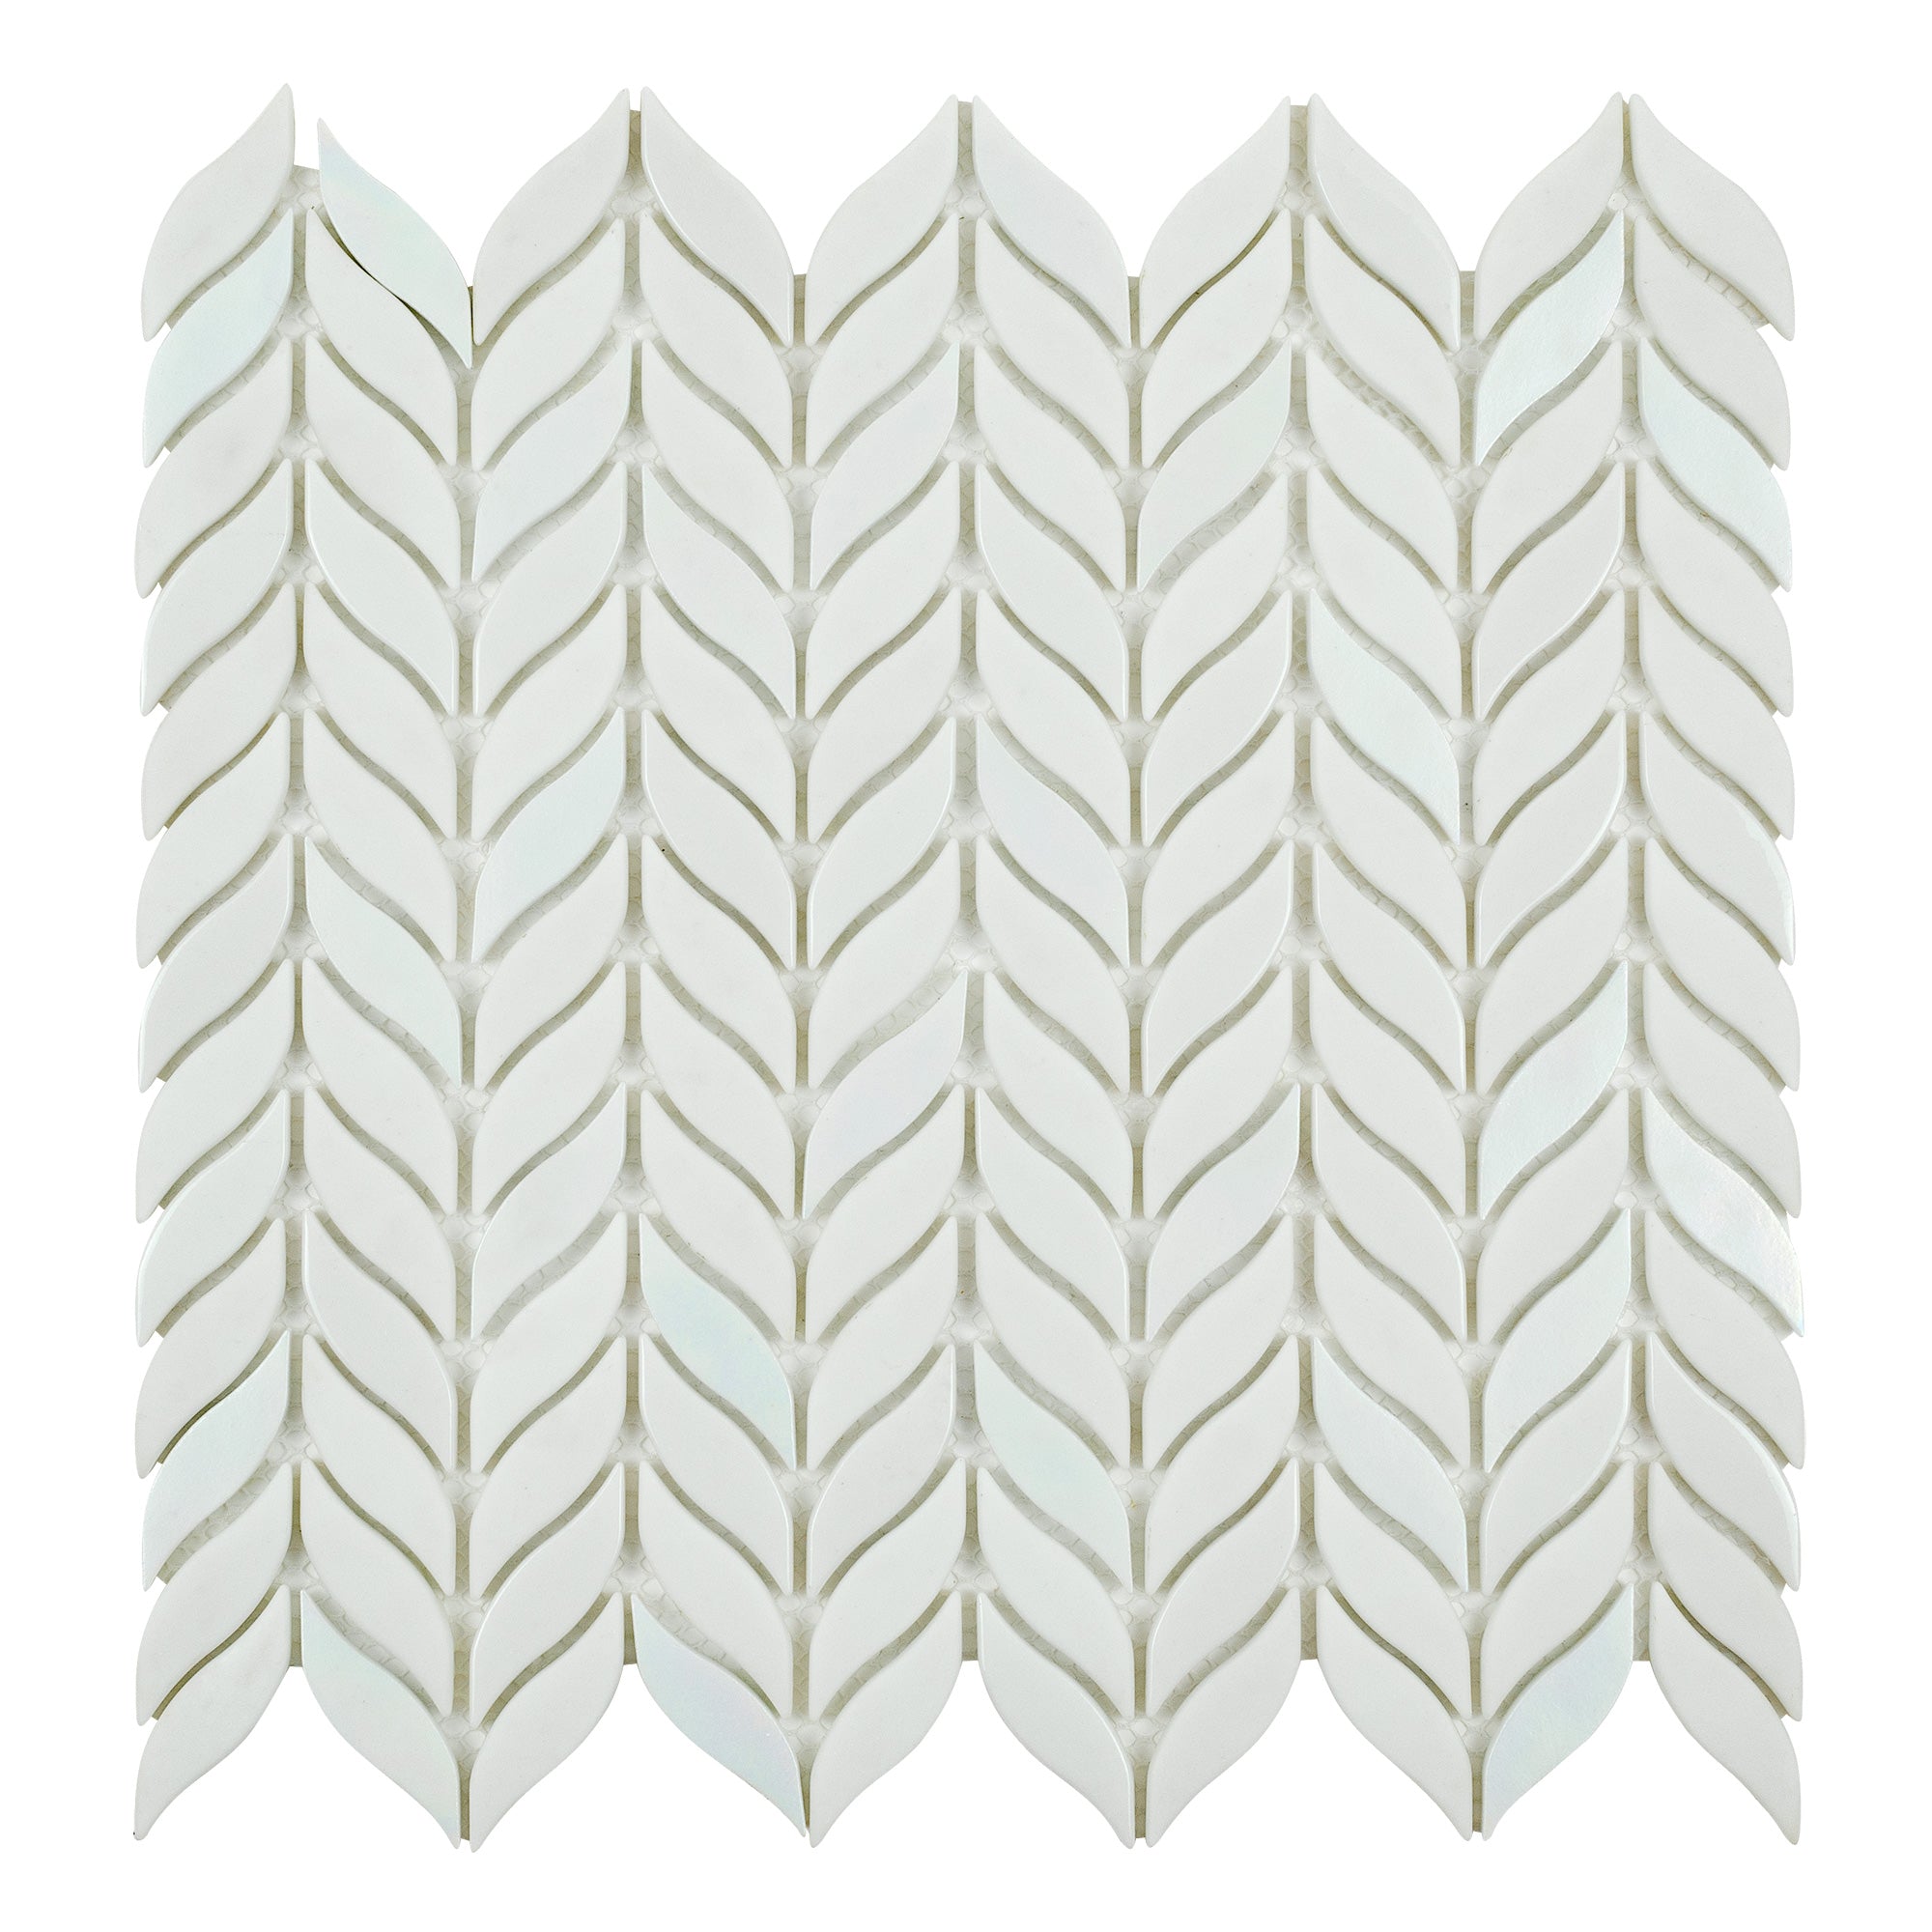 Image of MTO0770 Modern .5x2 White Chevron Glossy Glass Mosaic Tile